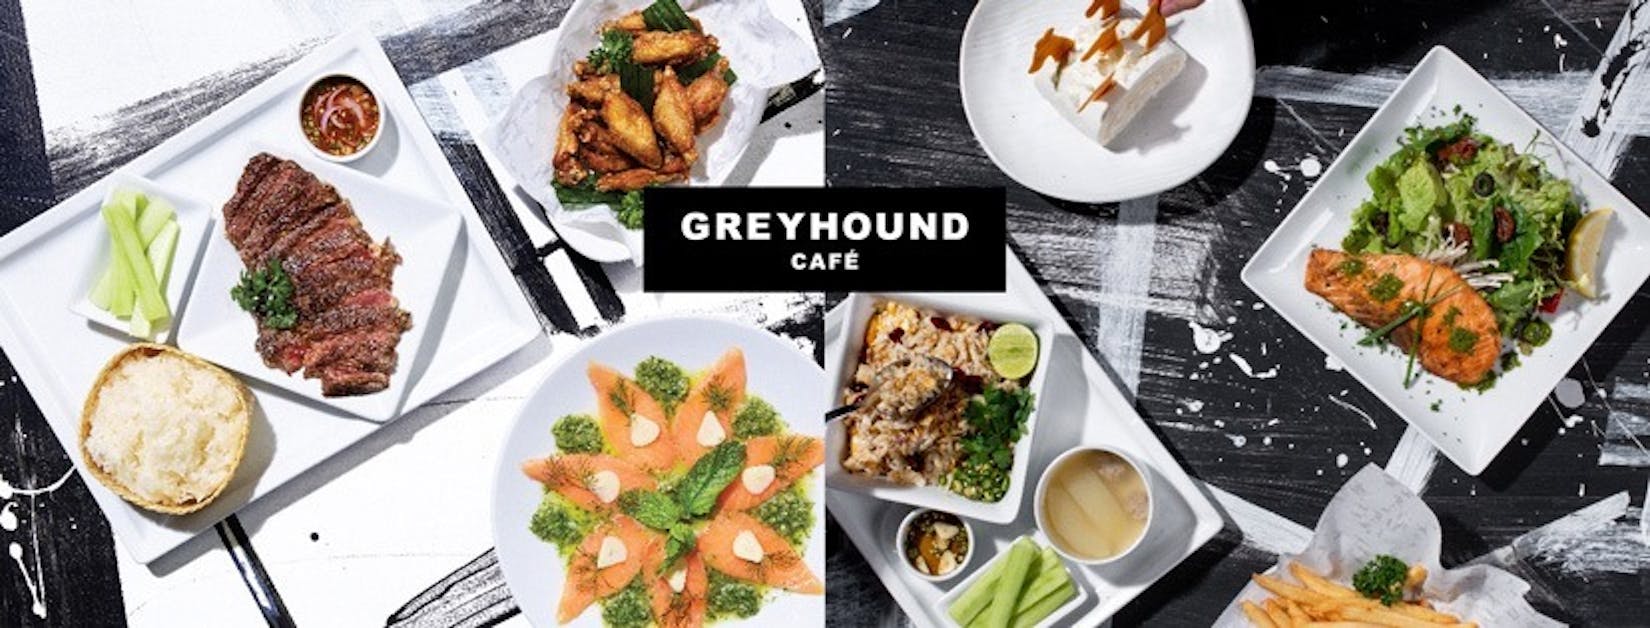 Greyhound cafe | yathar